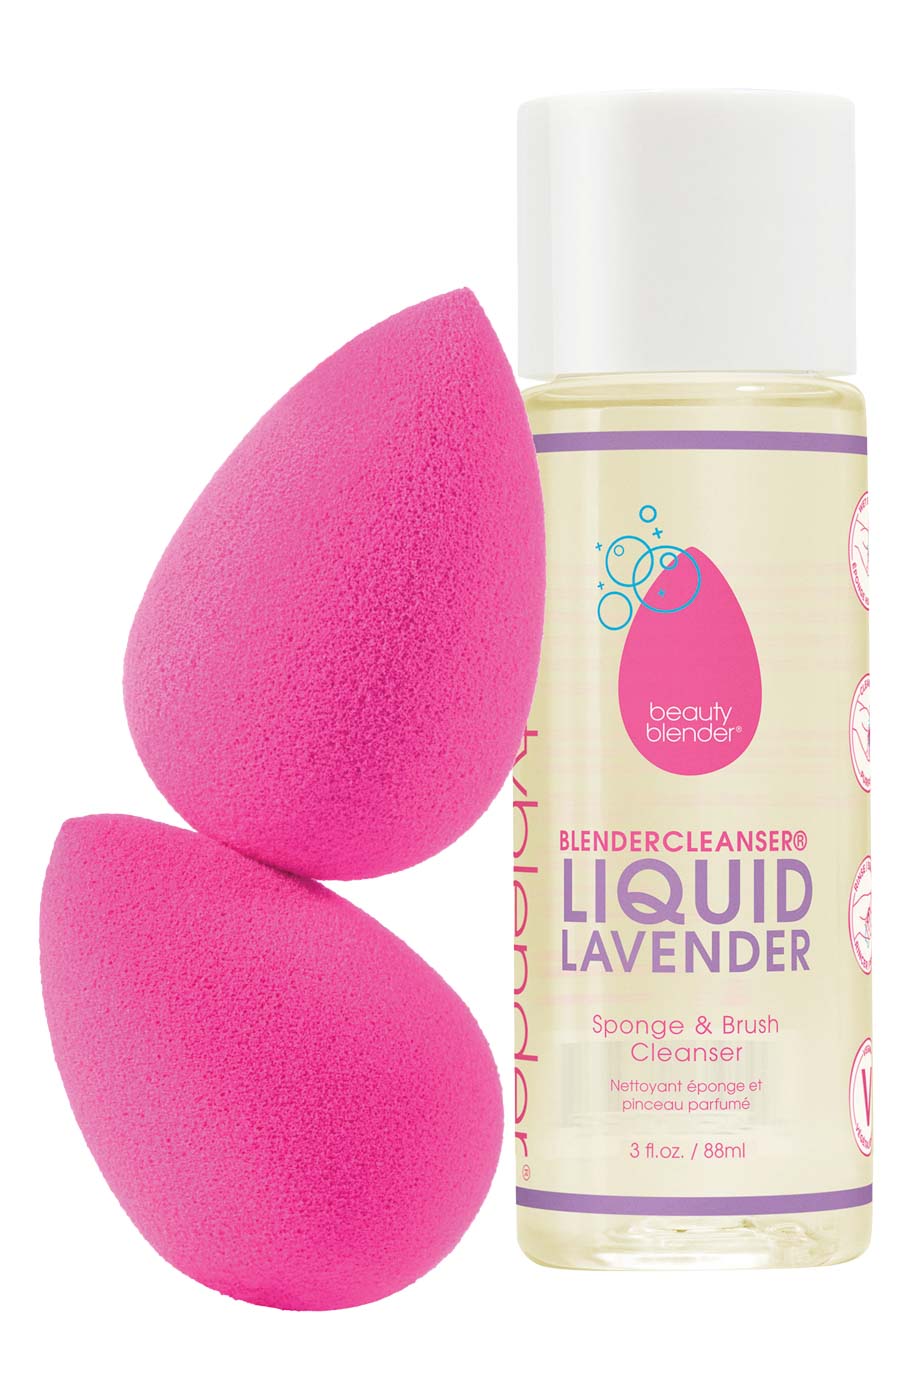 30 Beauty Blender, Makeup Sponge & Liquid Blender Cleanser Set, Nordstrom.com